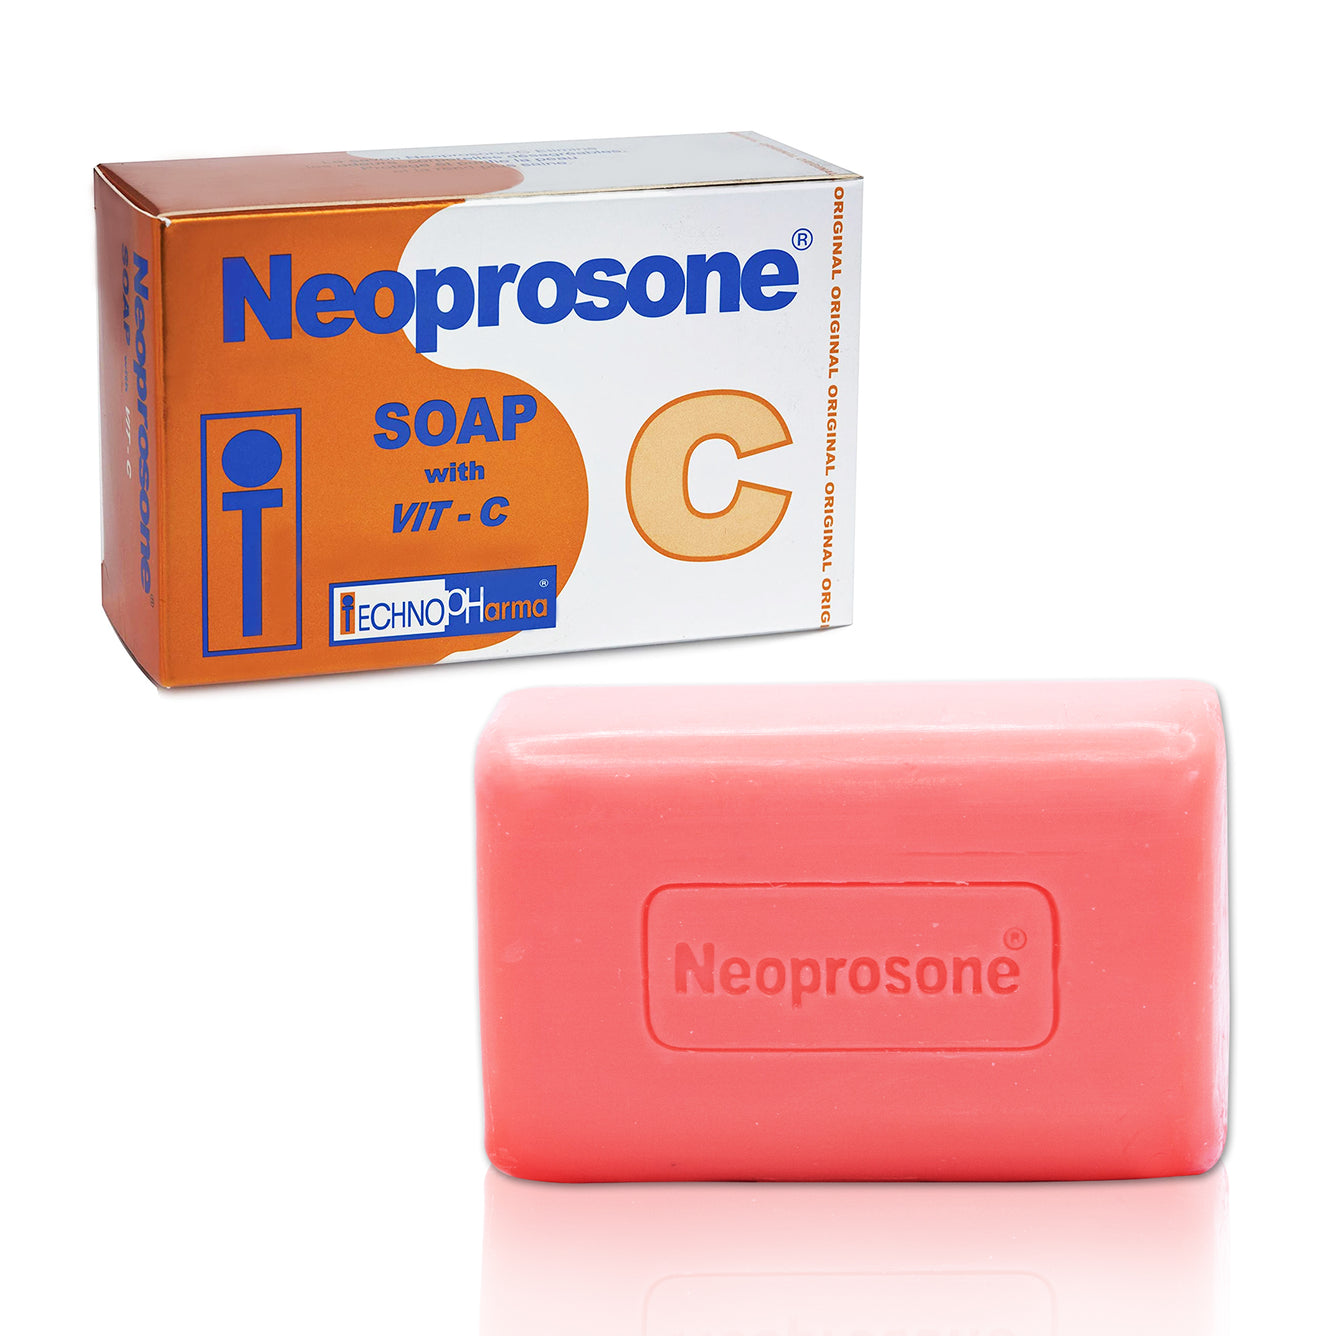 Neoprosone Vitamin C Cleansing Bar 4.4 oz / 200g Neoprosone Vitamin 